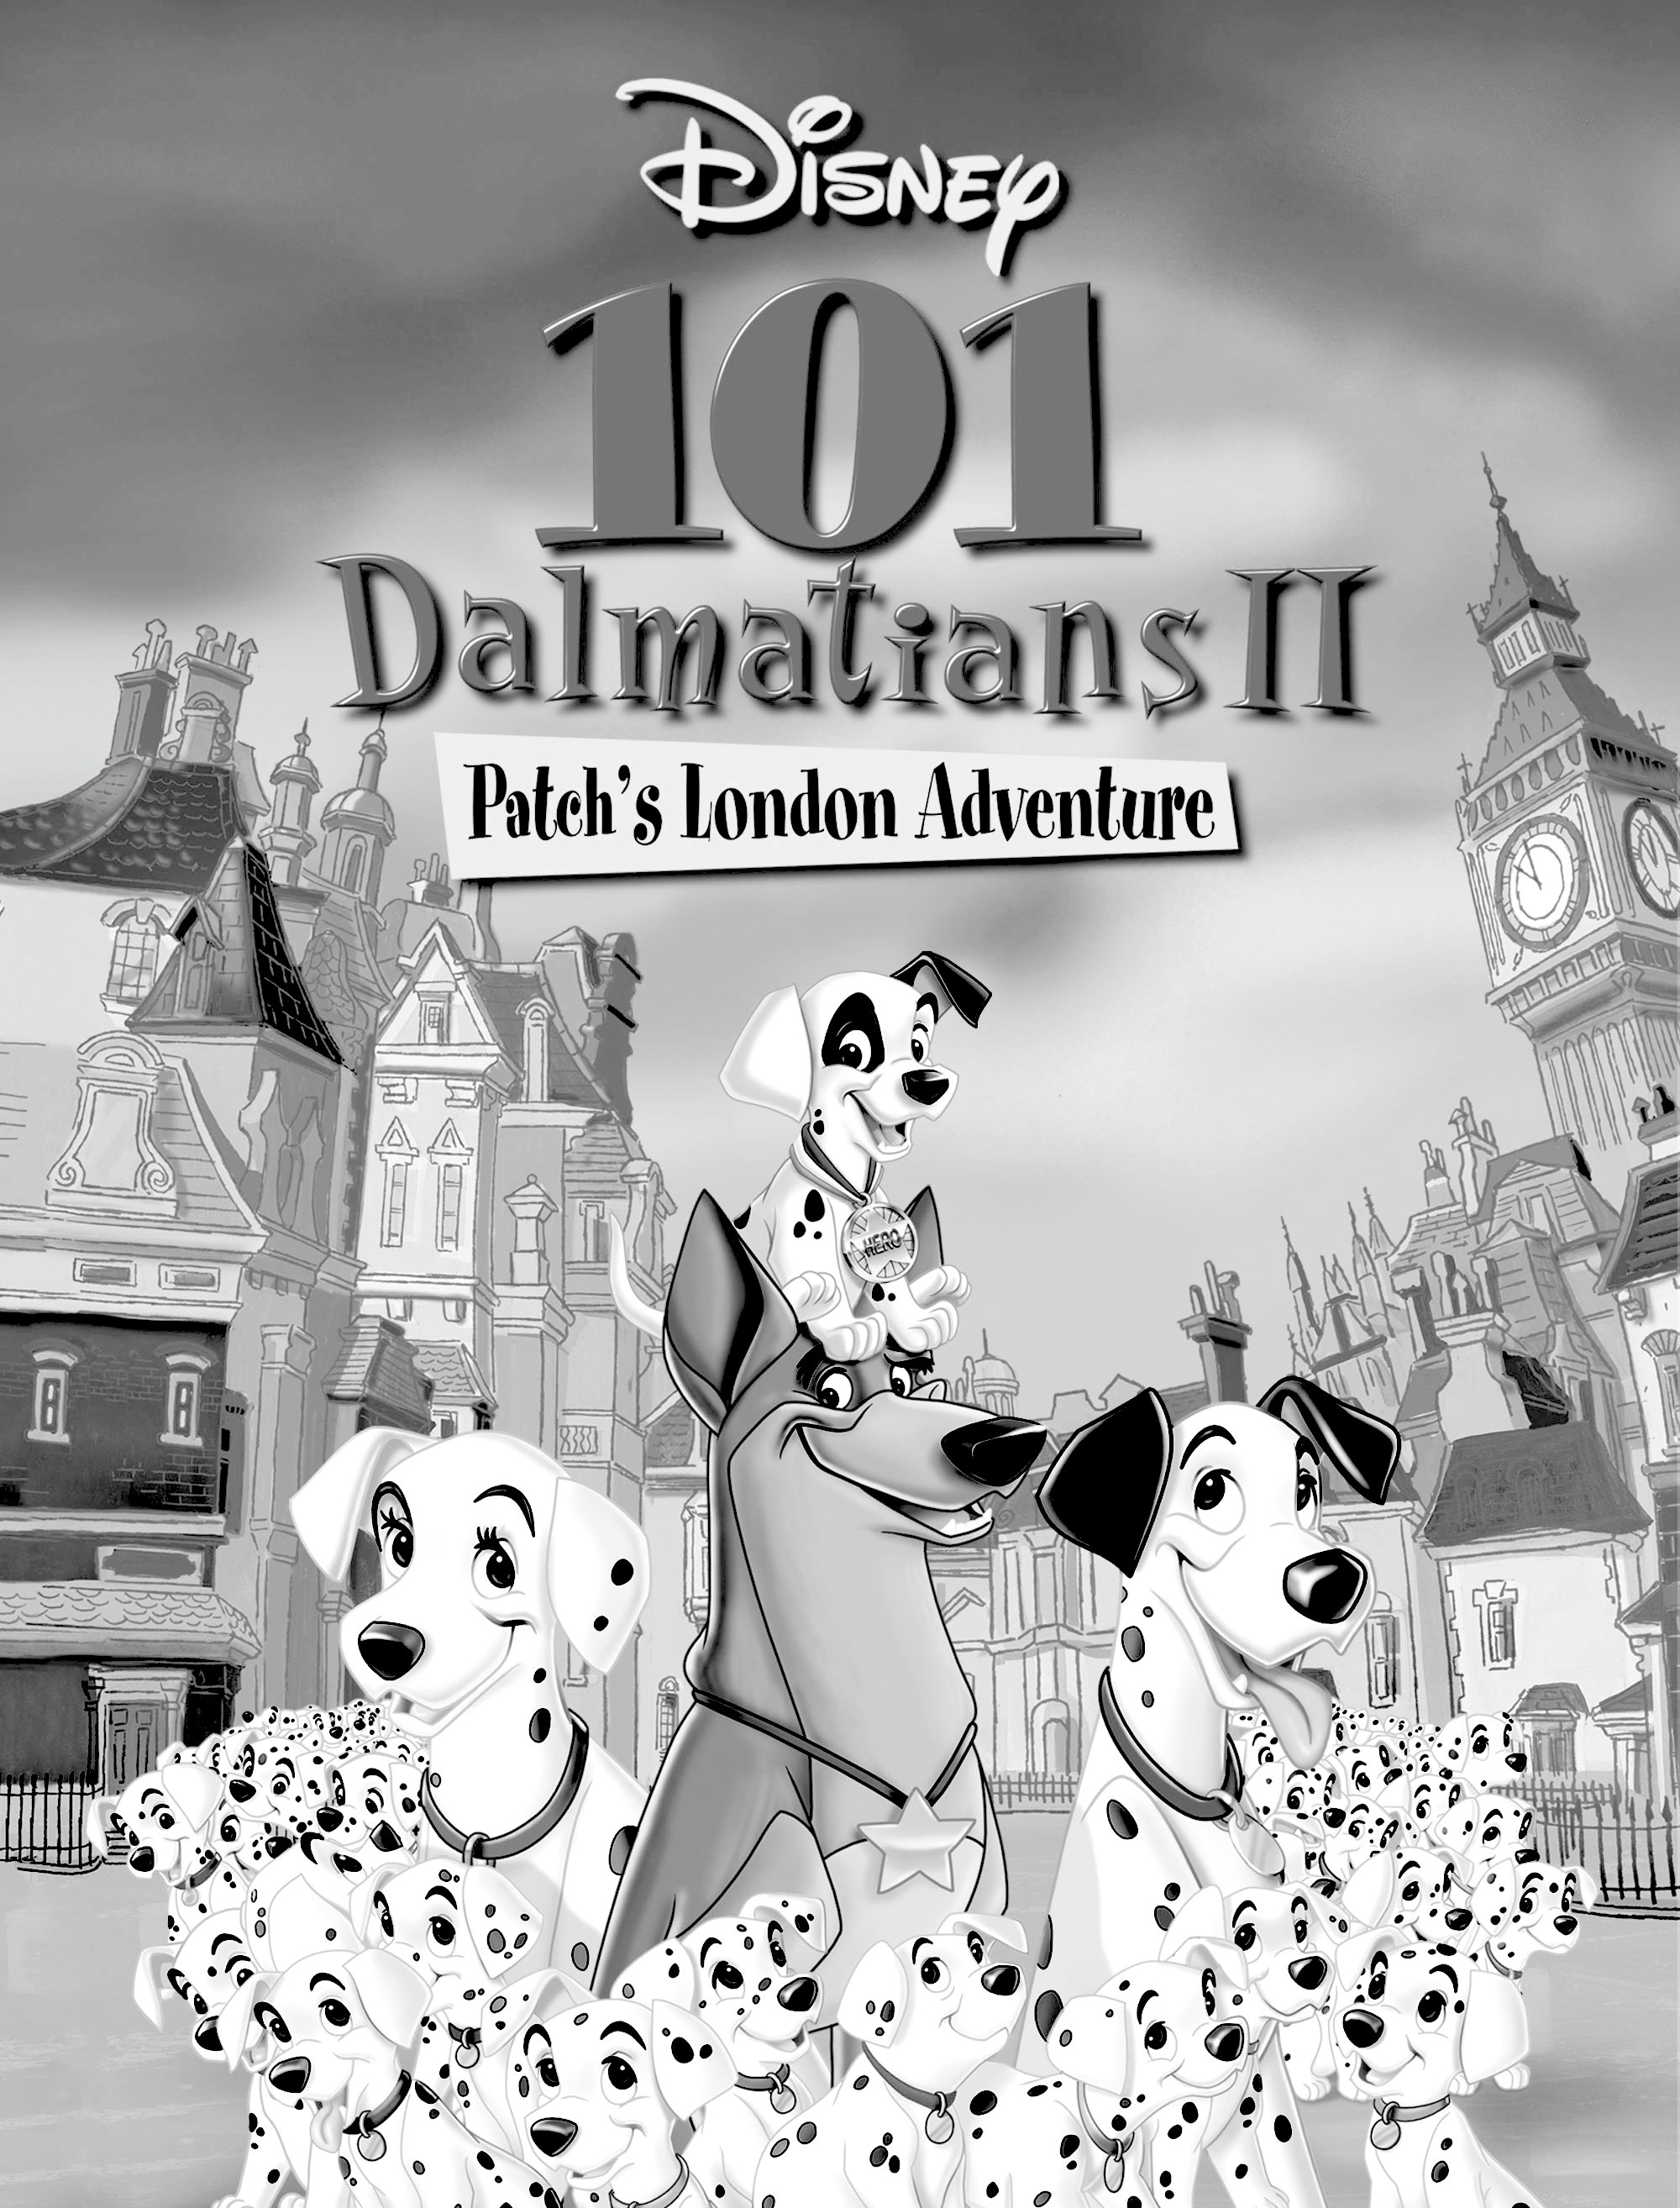 101-dalmations-II-2-disney-patch's-london-adventure-film-score-composer-richard-gibbs.jpg